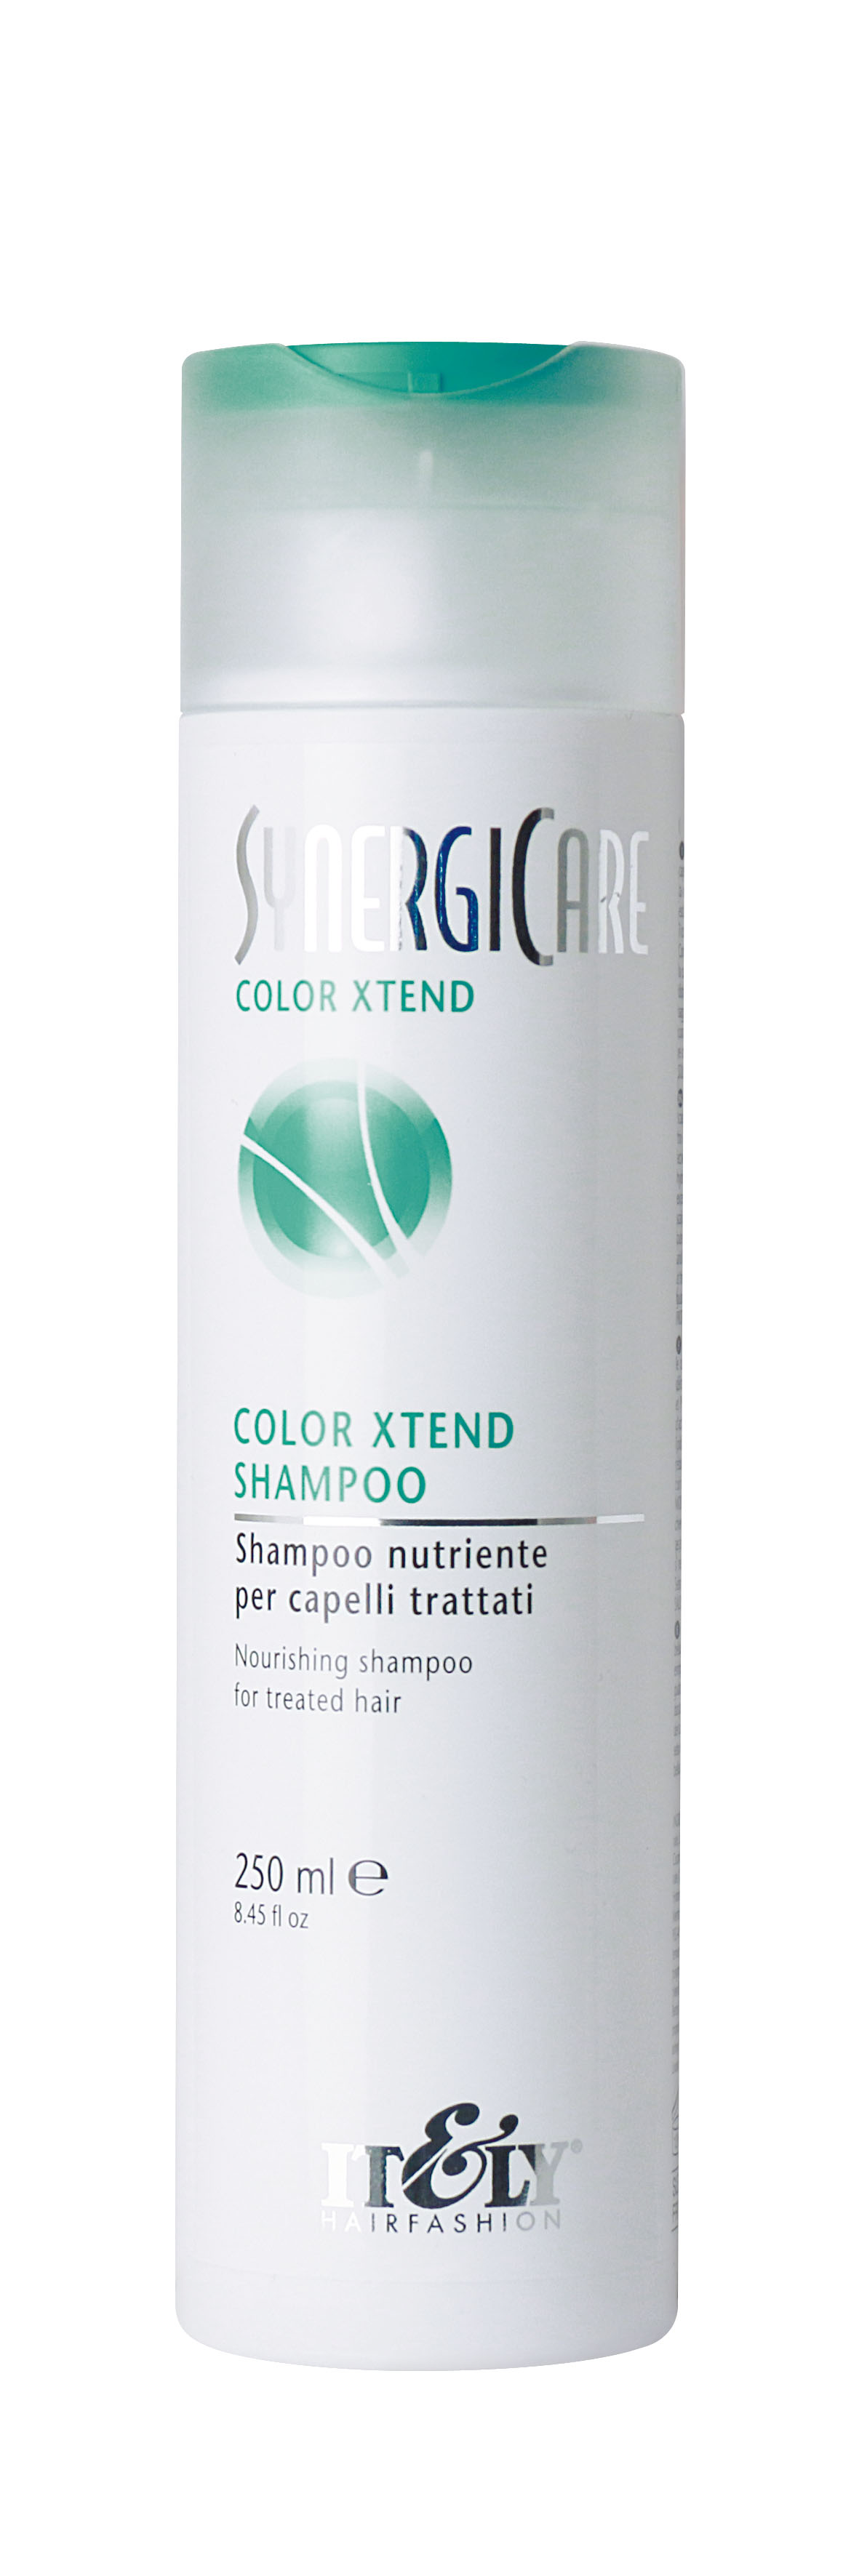 Color Xtend Shampoo